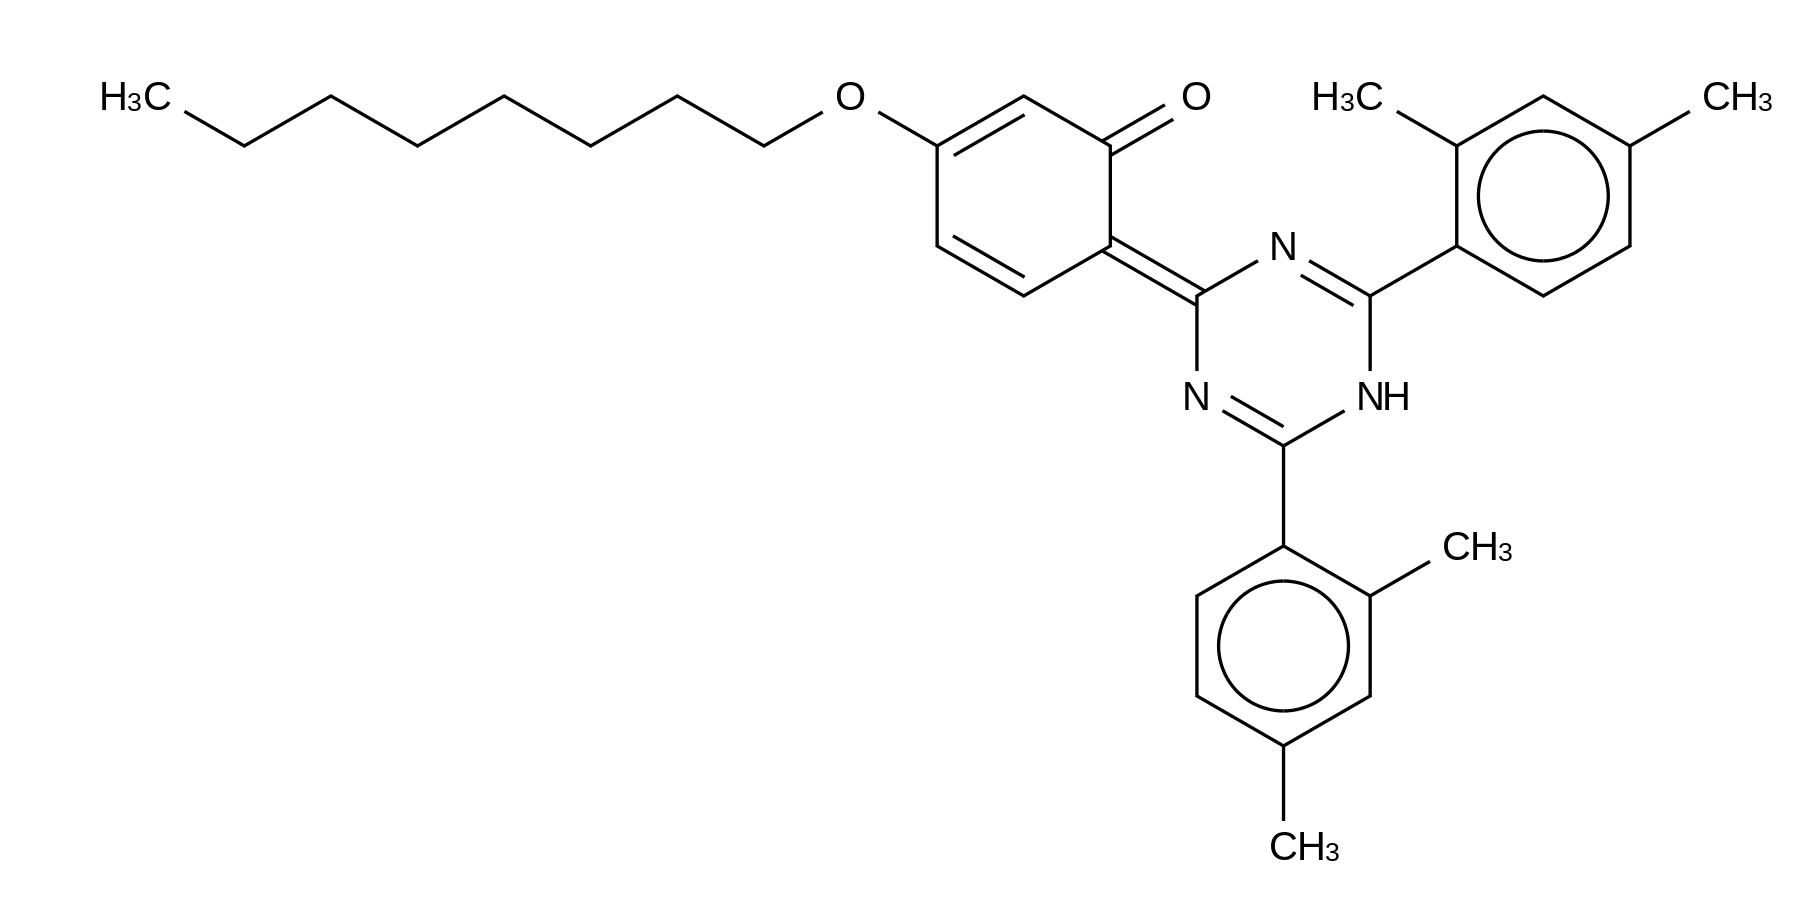 2-[4,6-Bis(2,4-dimethylphenyl)-1,3,5-triazin-2-yl]-5-(octyloxy)phenol